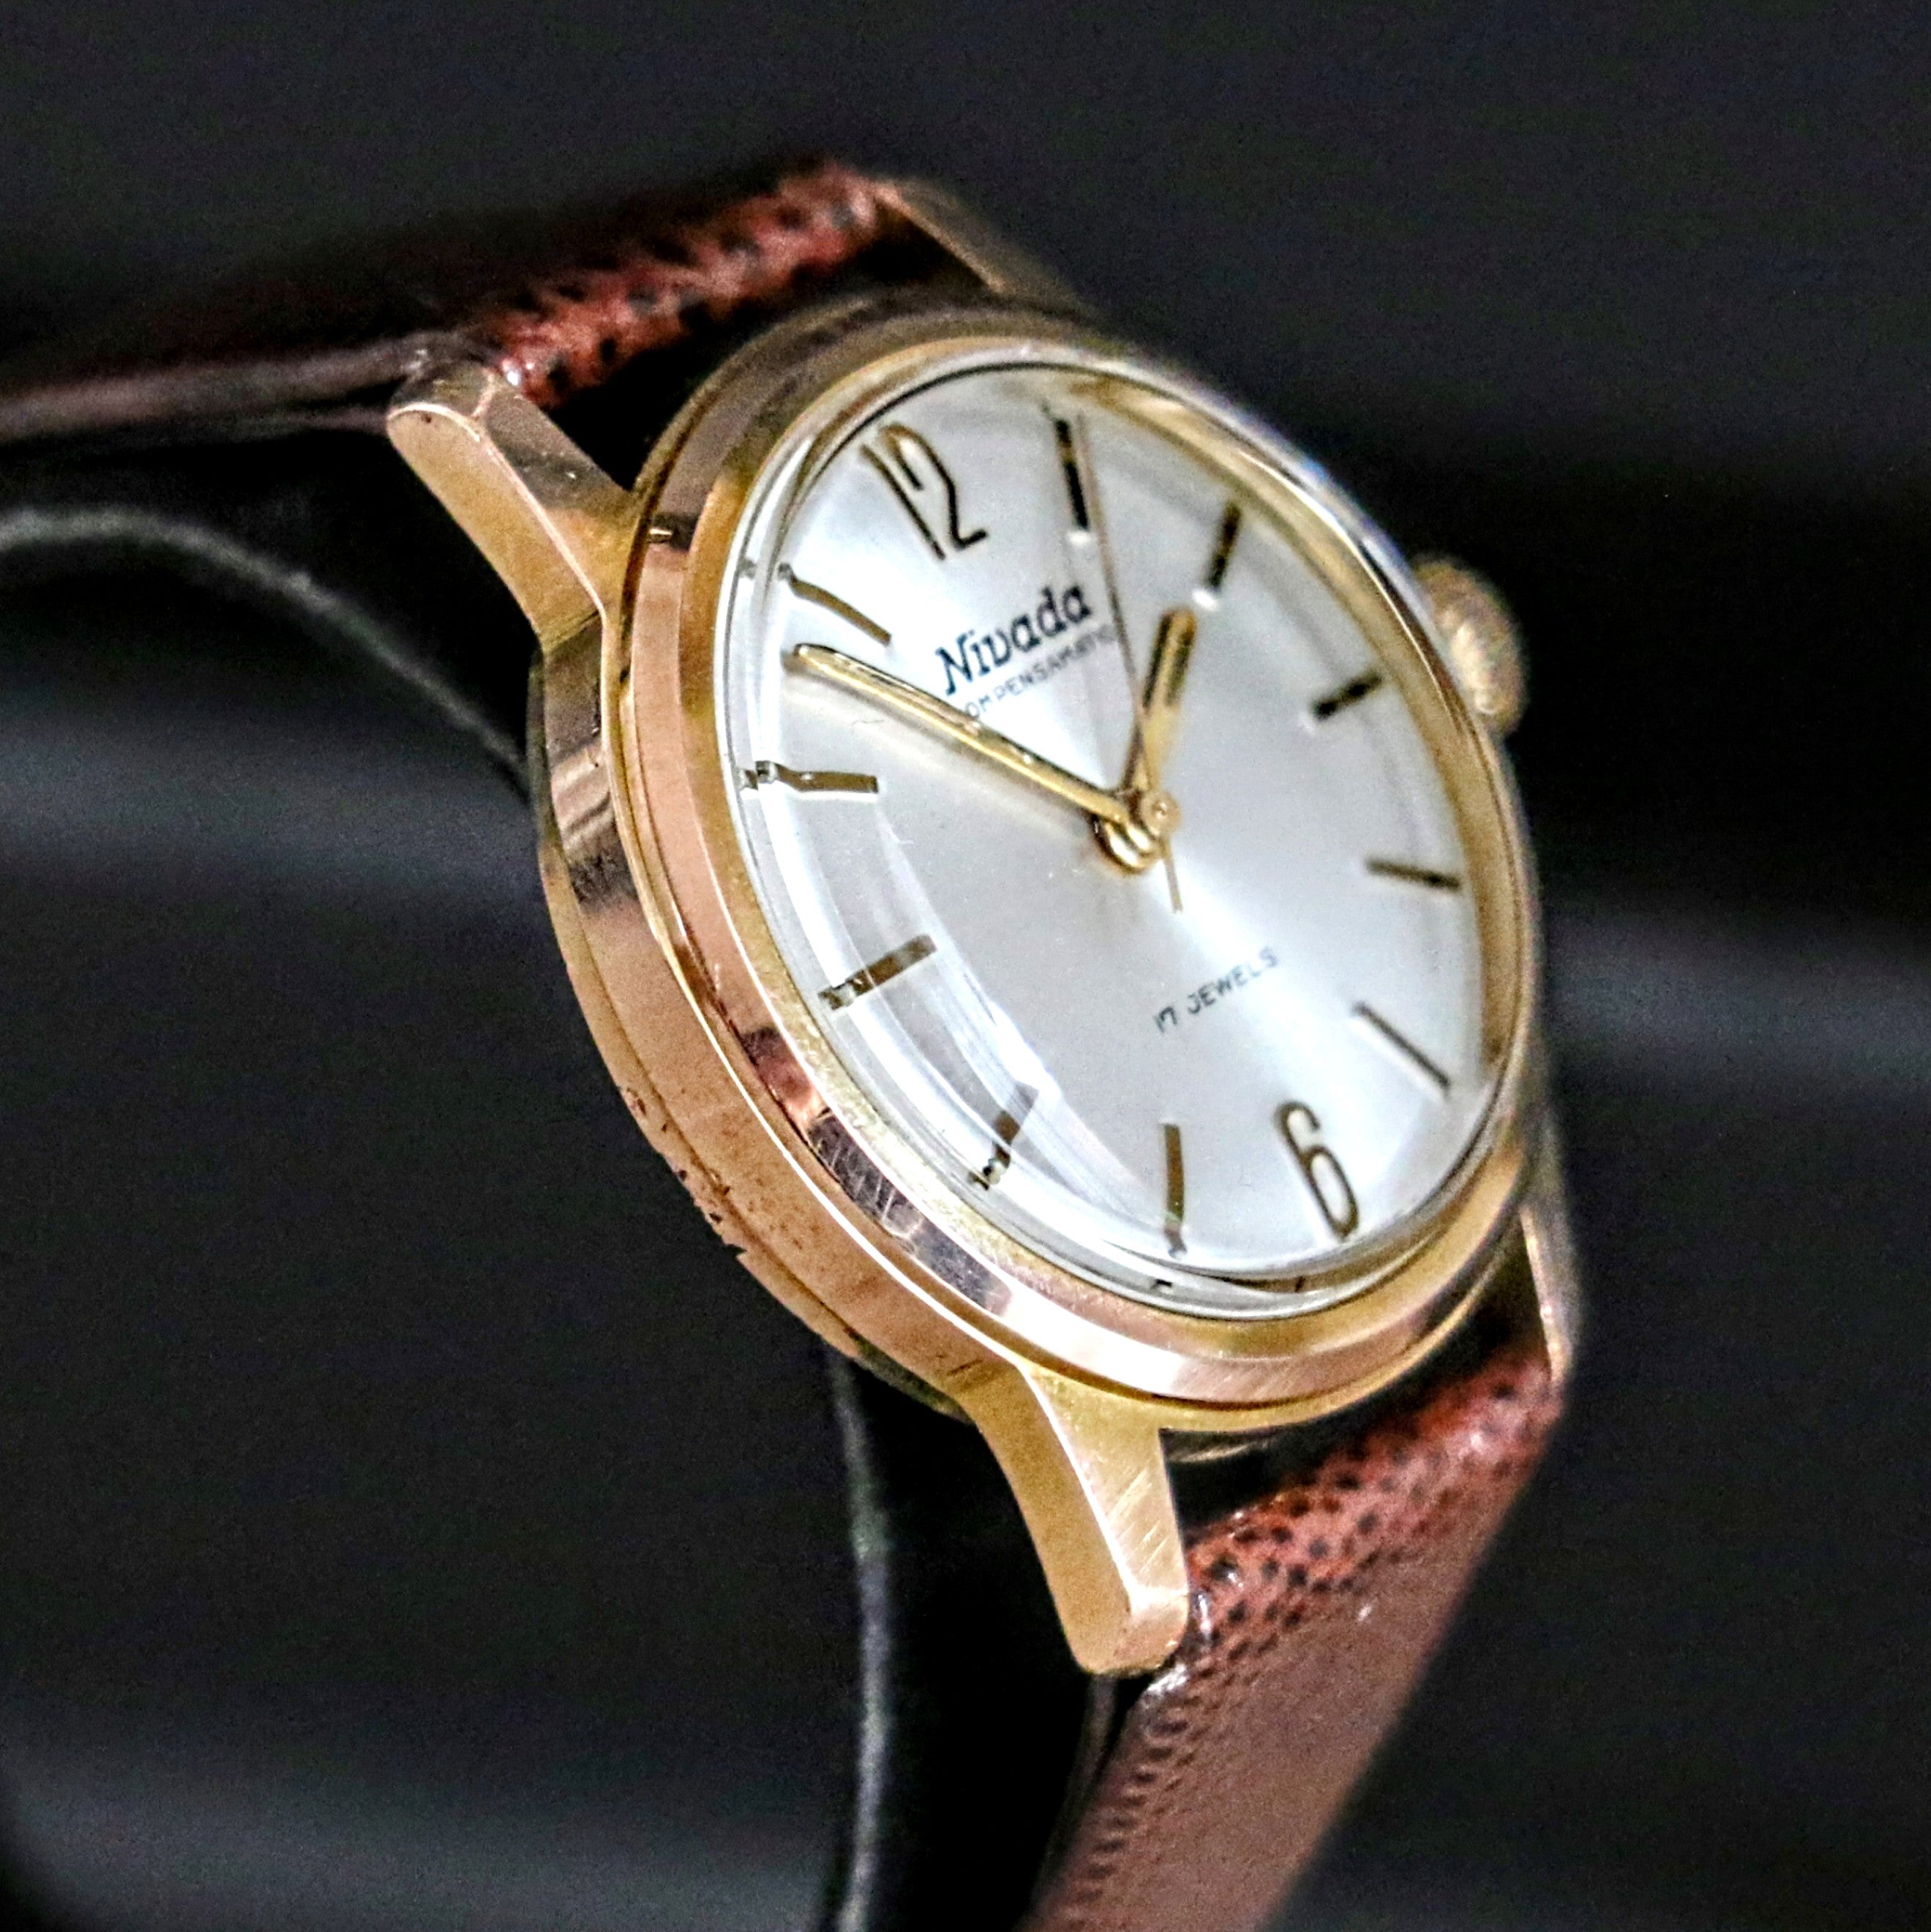 Vintage NIVADA Compensamatic Wristwatch Caliber AS ST 1802/03 17J Swiss Watch